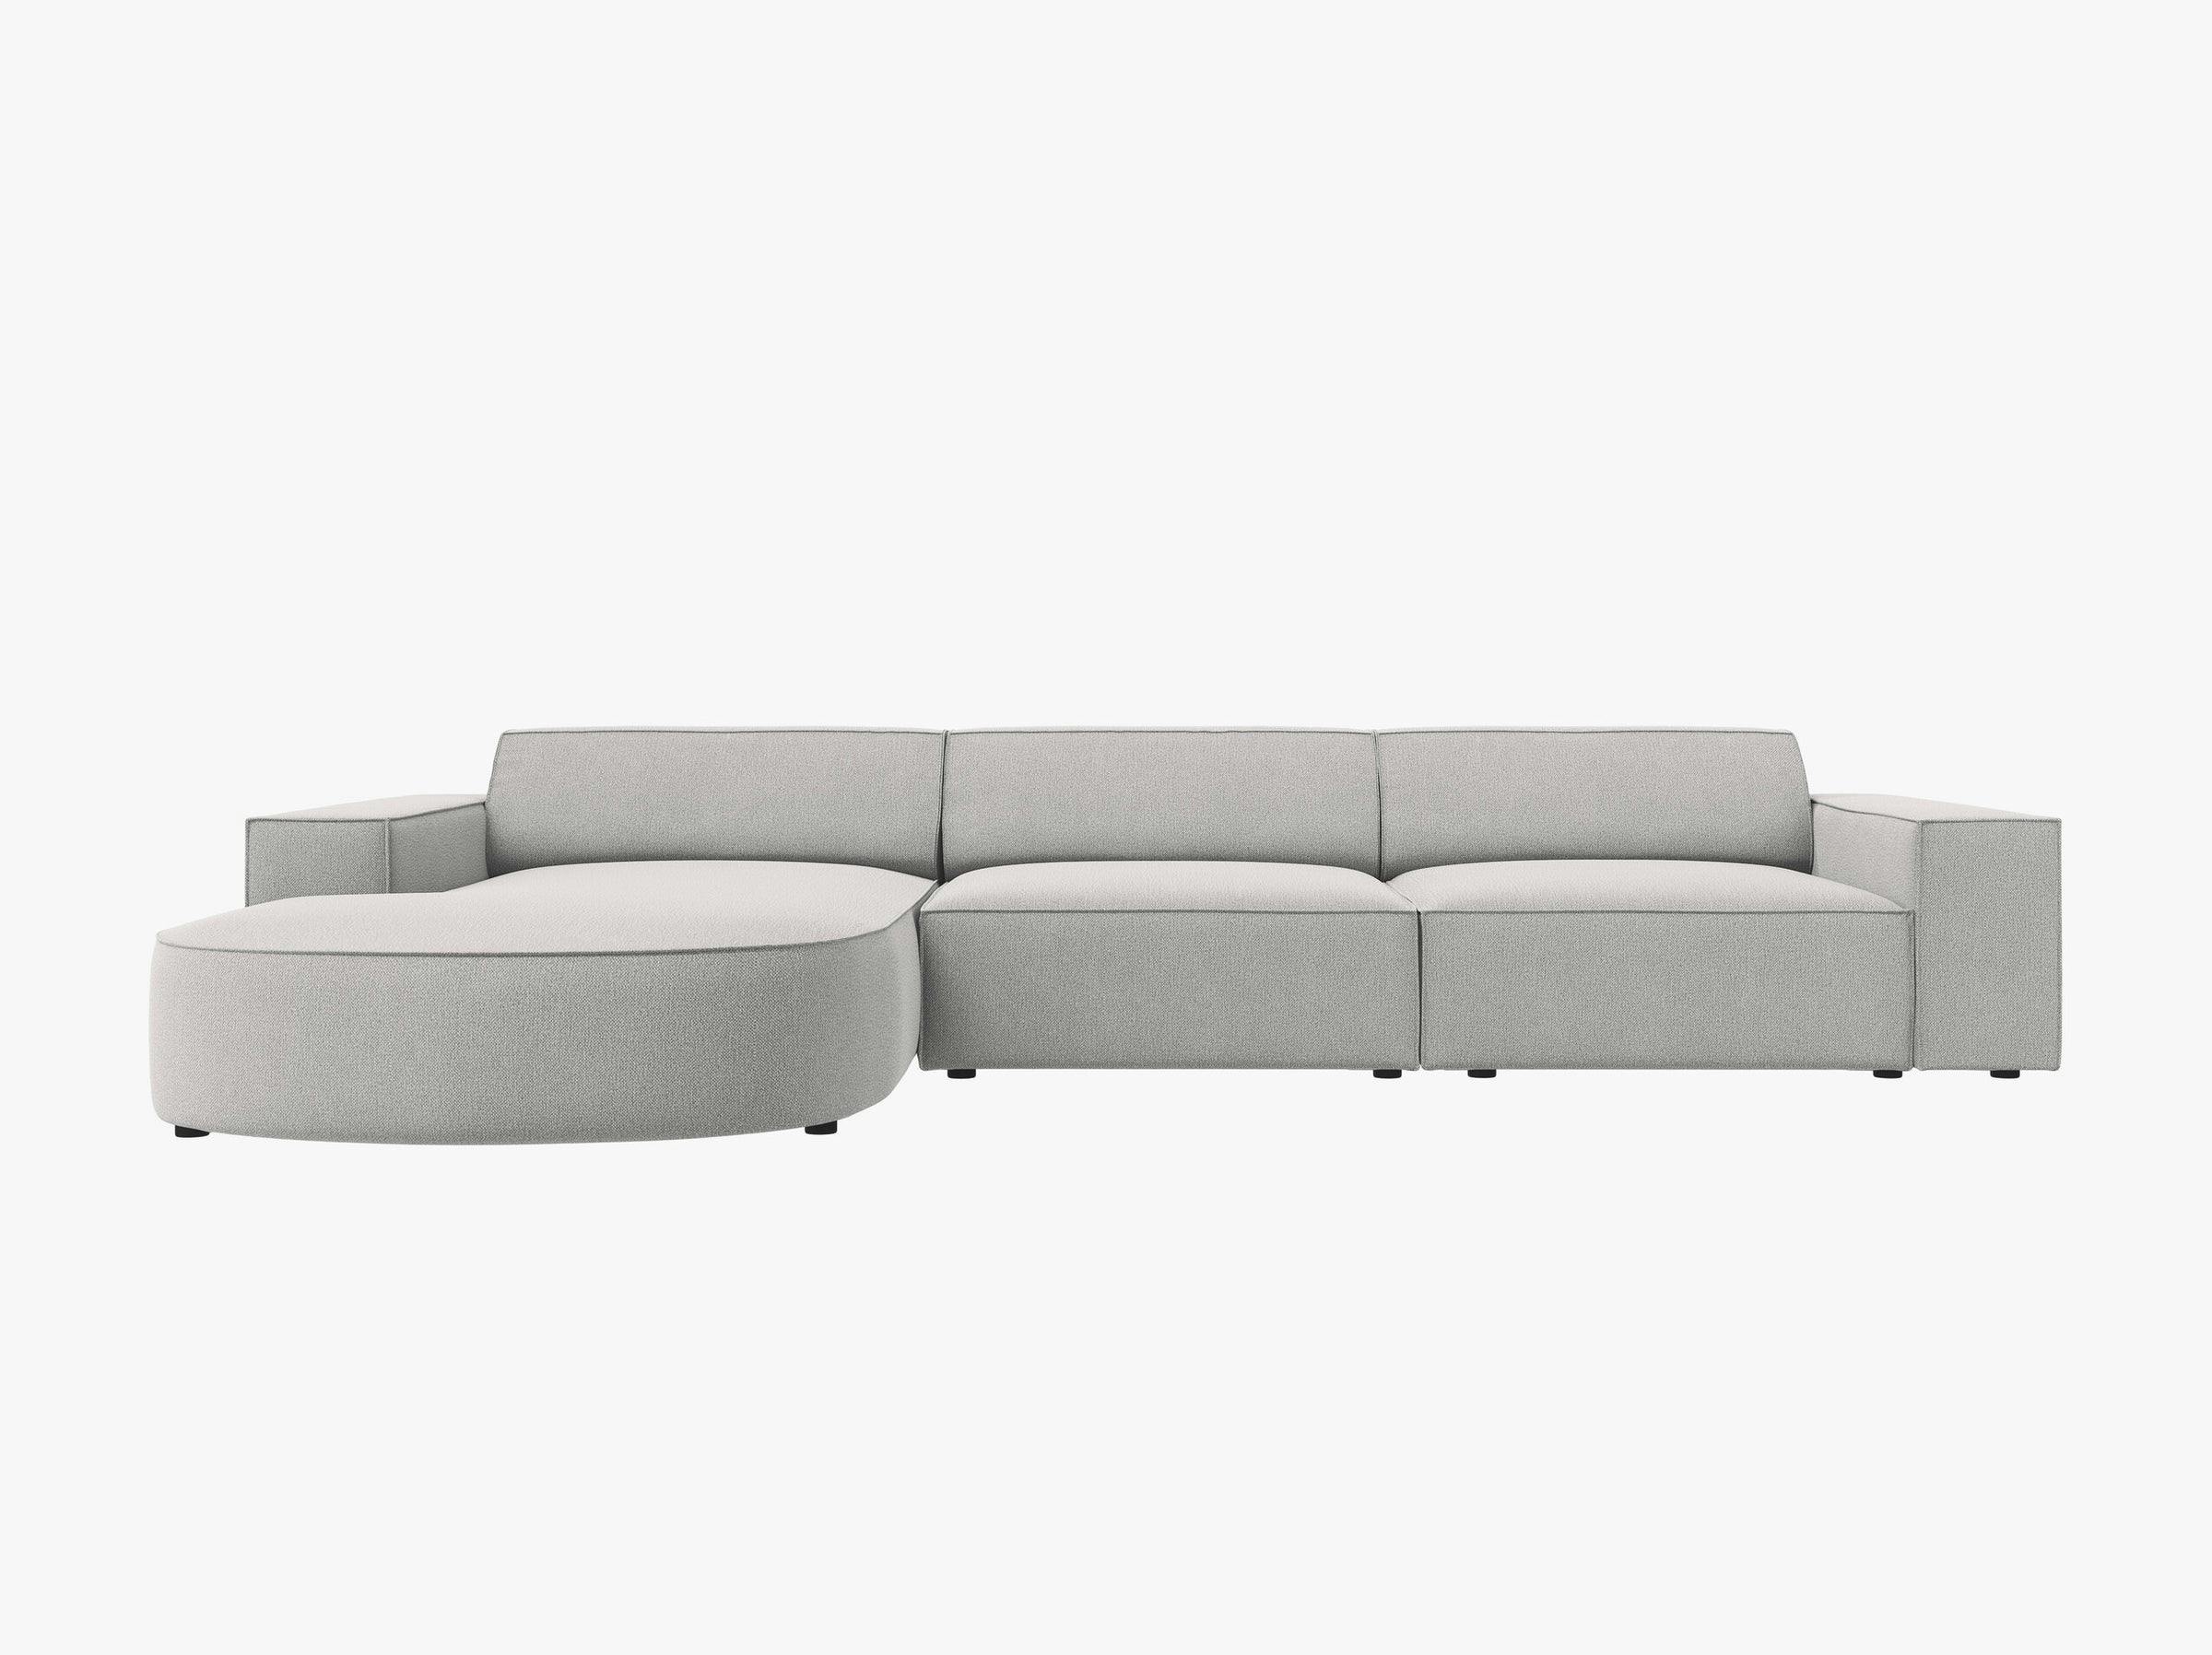 Jodie sofás tessuto strutturato grigio chiaro